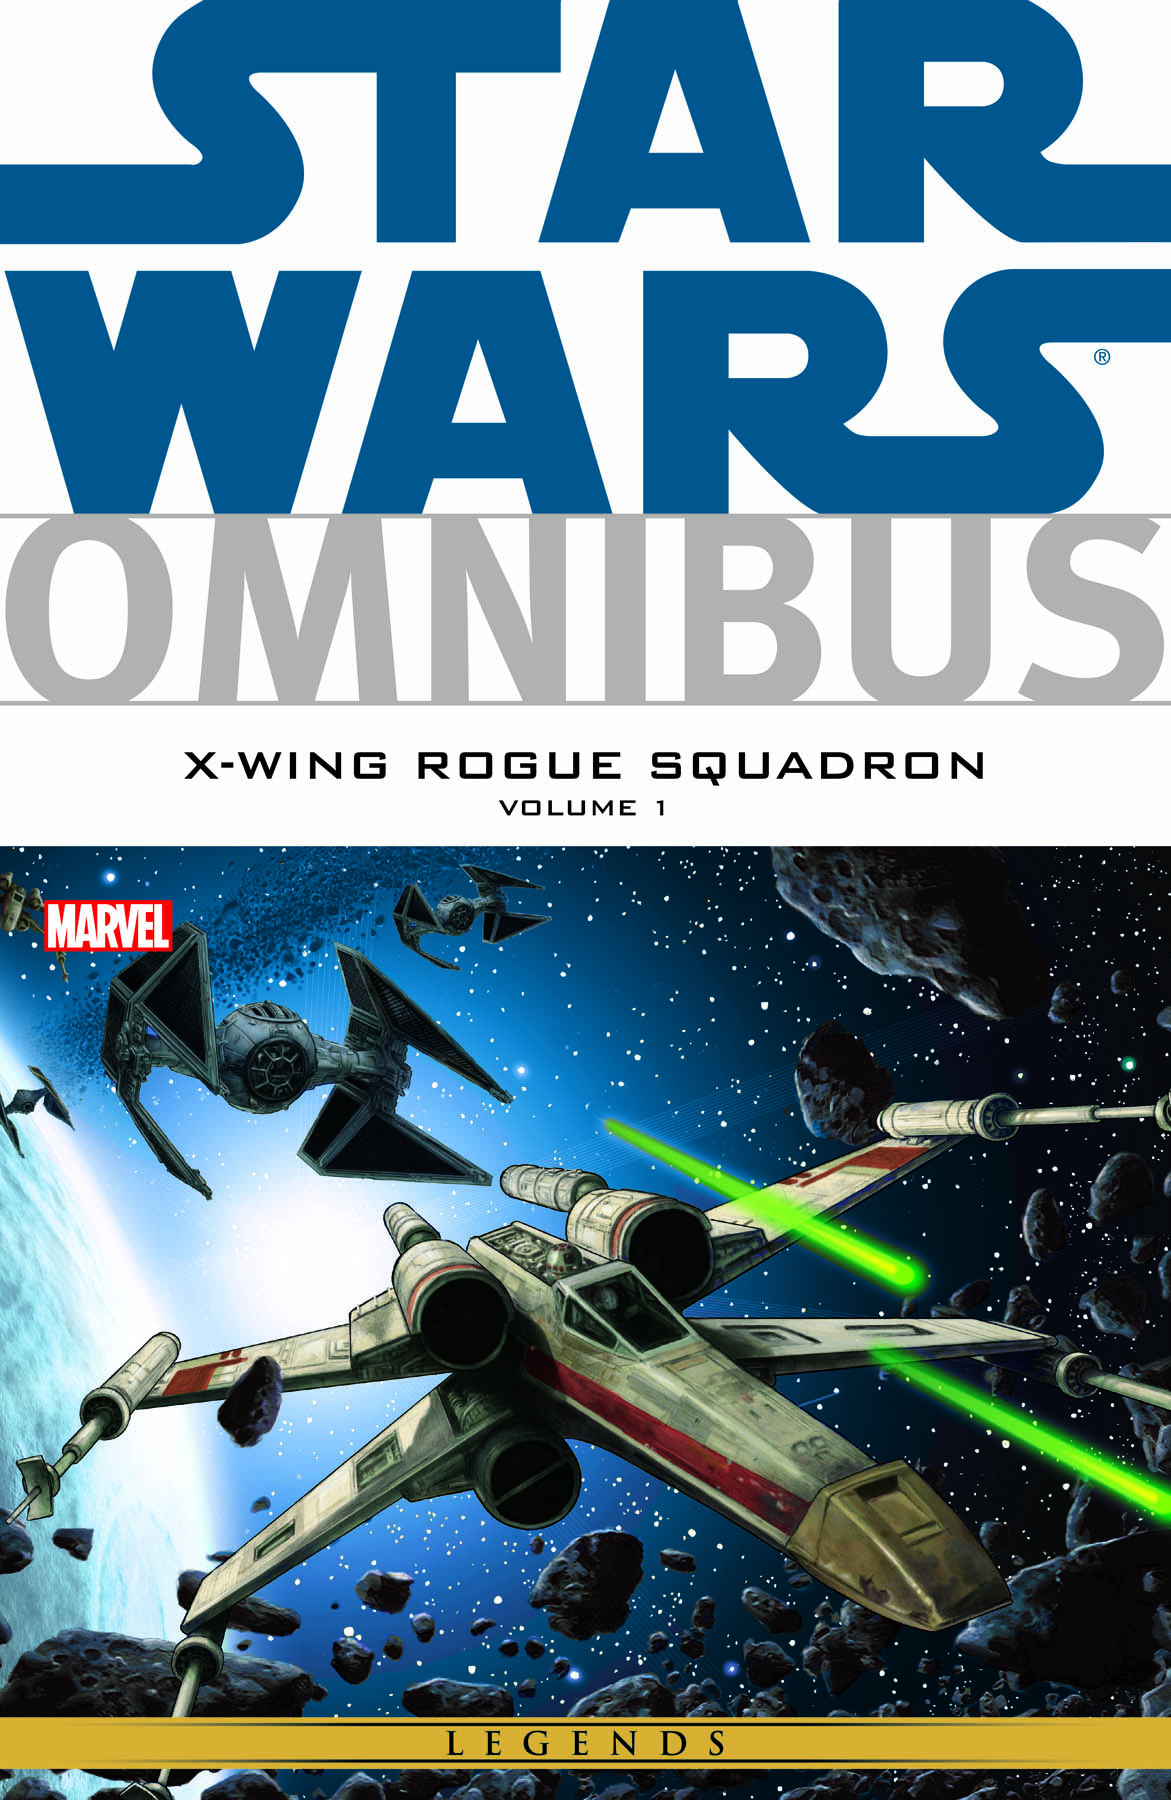 STAR WARS OMNIBUS: X-WING ROGUE SQUADRON VOL. 1 TPB (Trade Paperback)